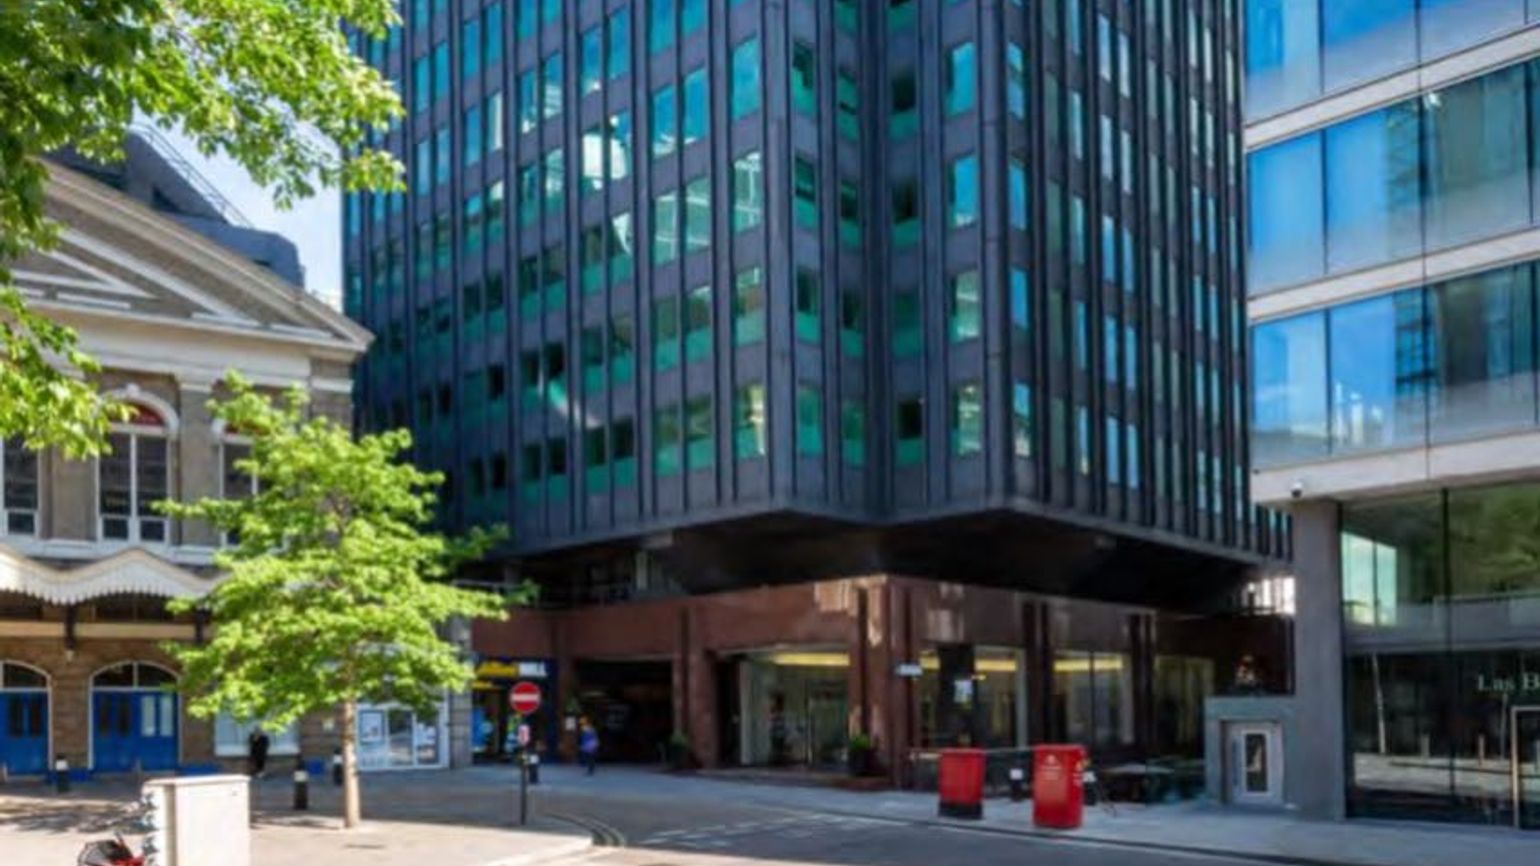 Premier Inn owner acquires London office building